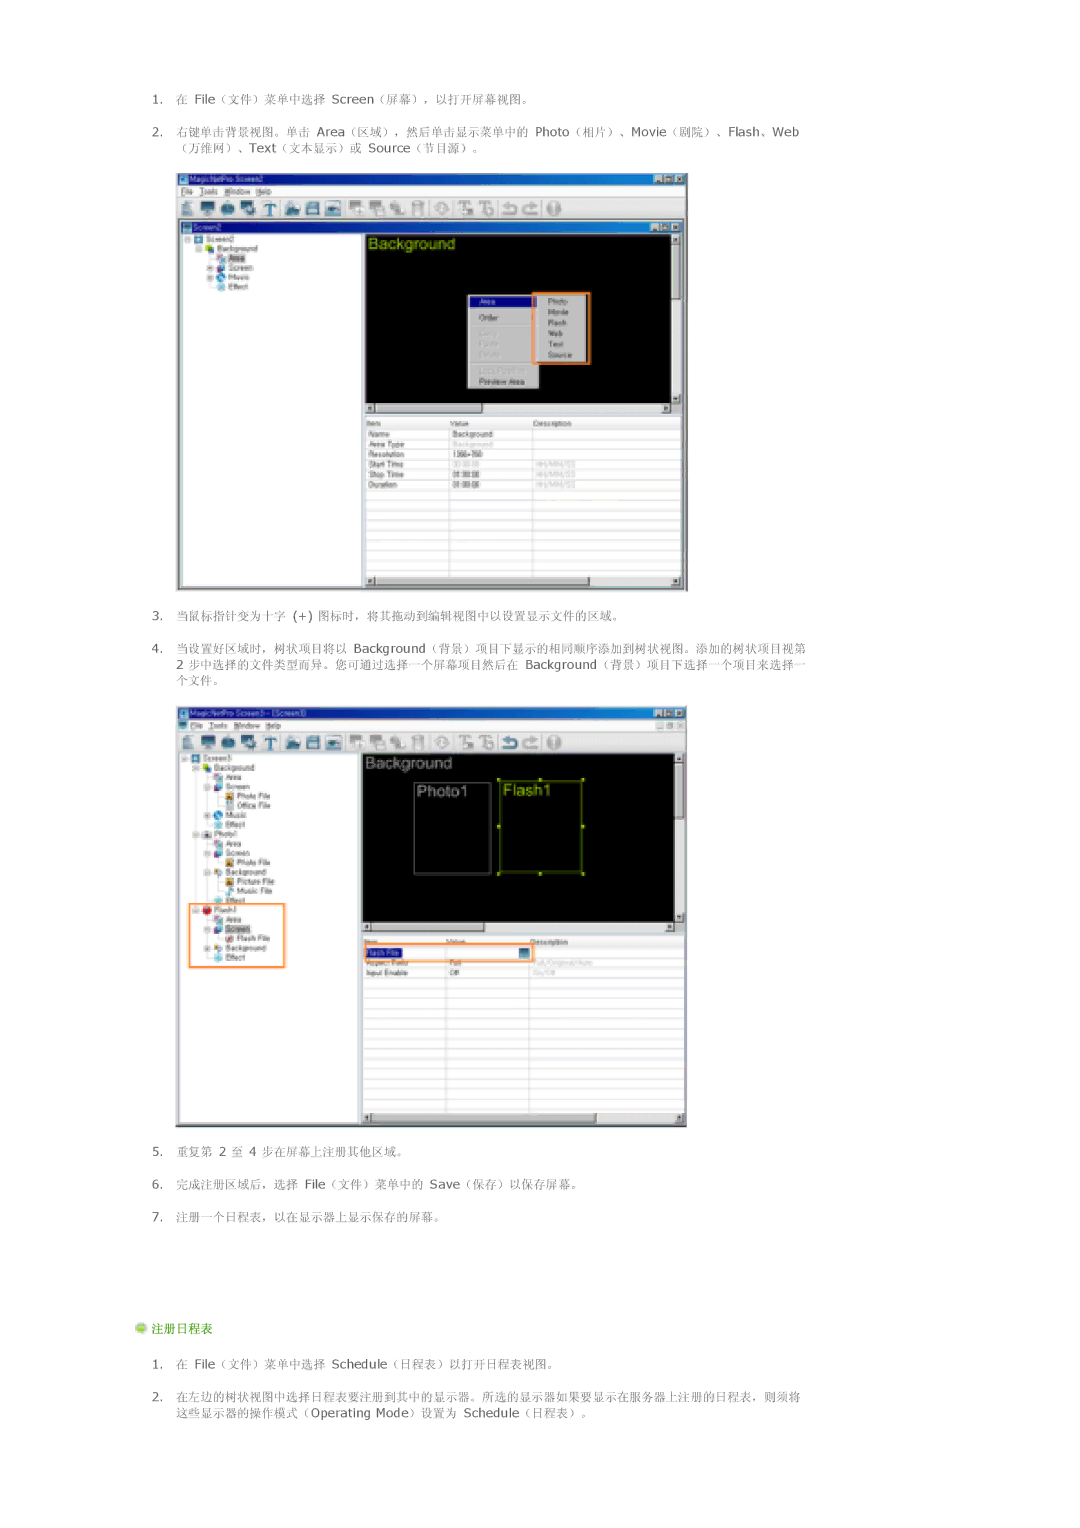 Samsung LS57BPTNB/EDC, LS57BPTNS/EDC manual 2 4 File Save Schedule Operating Mode 